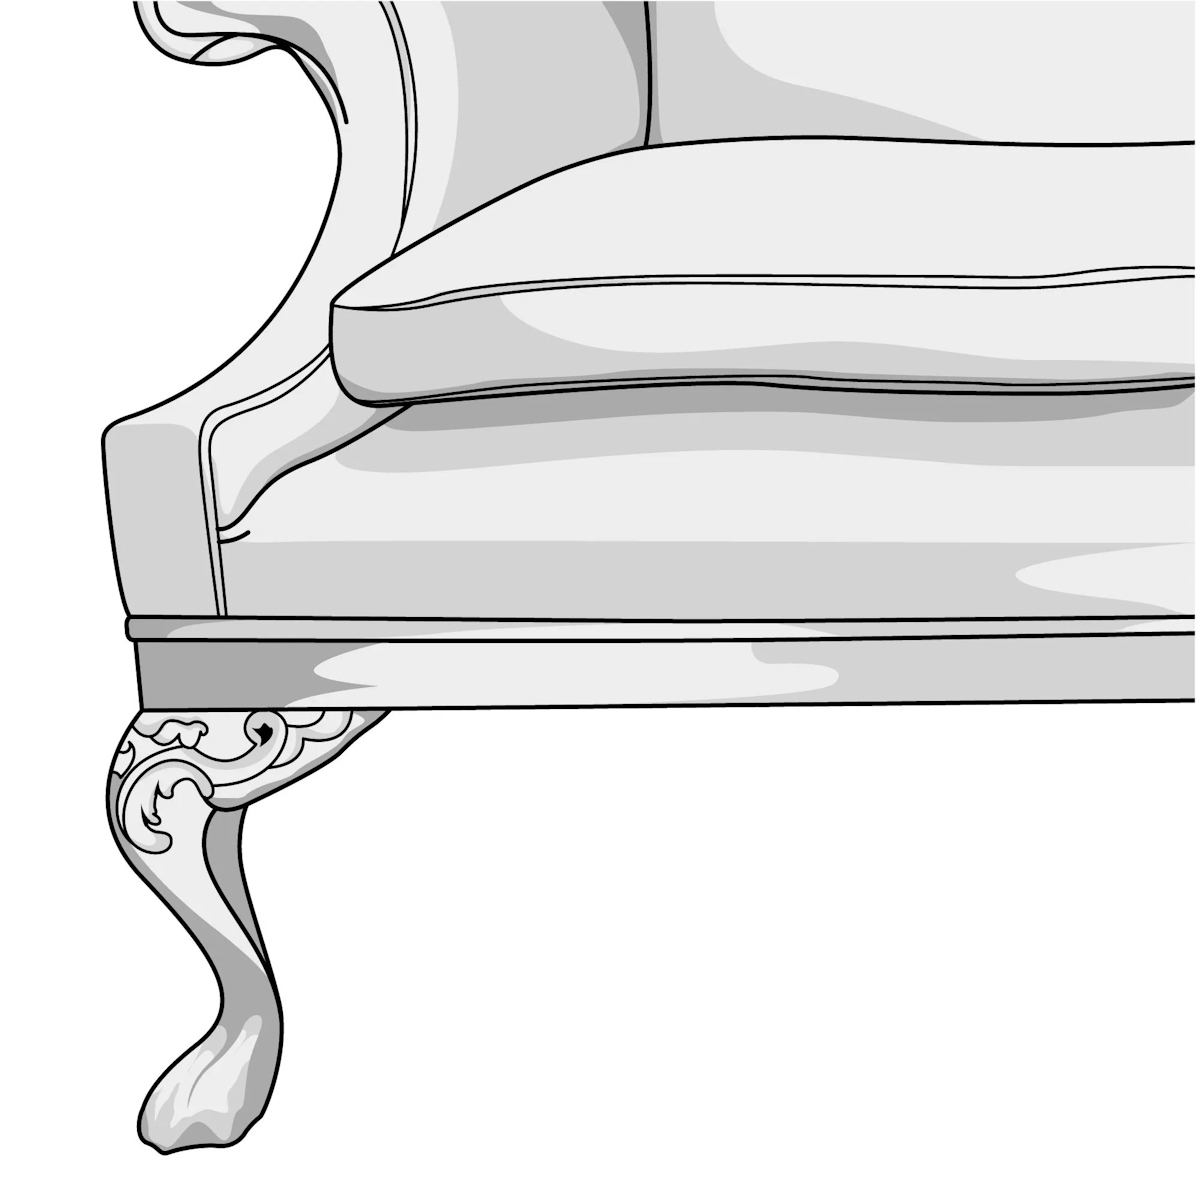 Illustration of paw foot style sofa